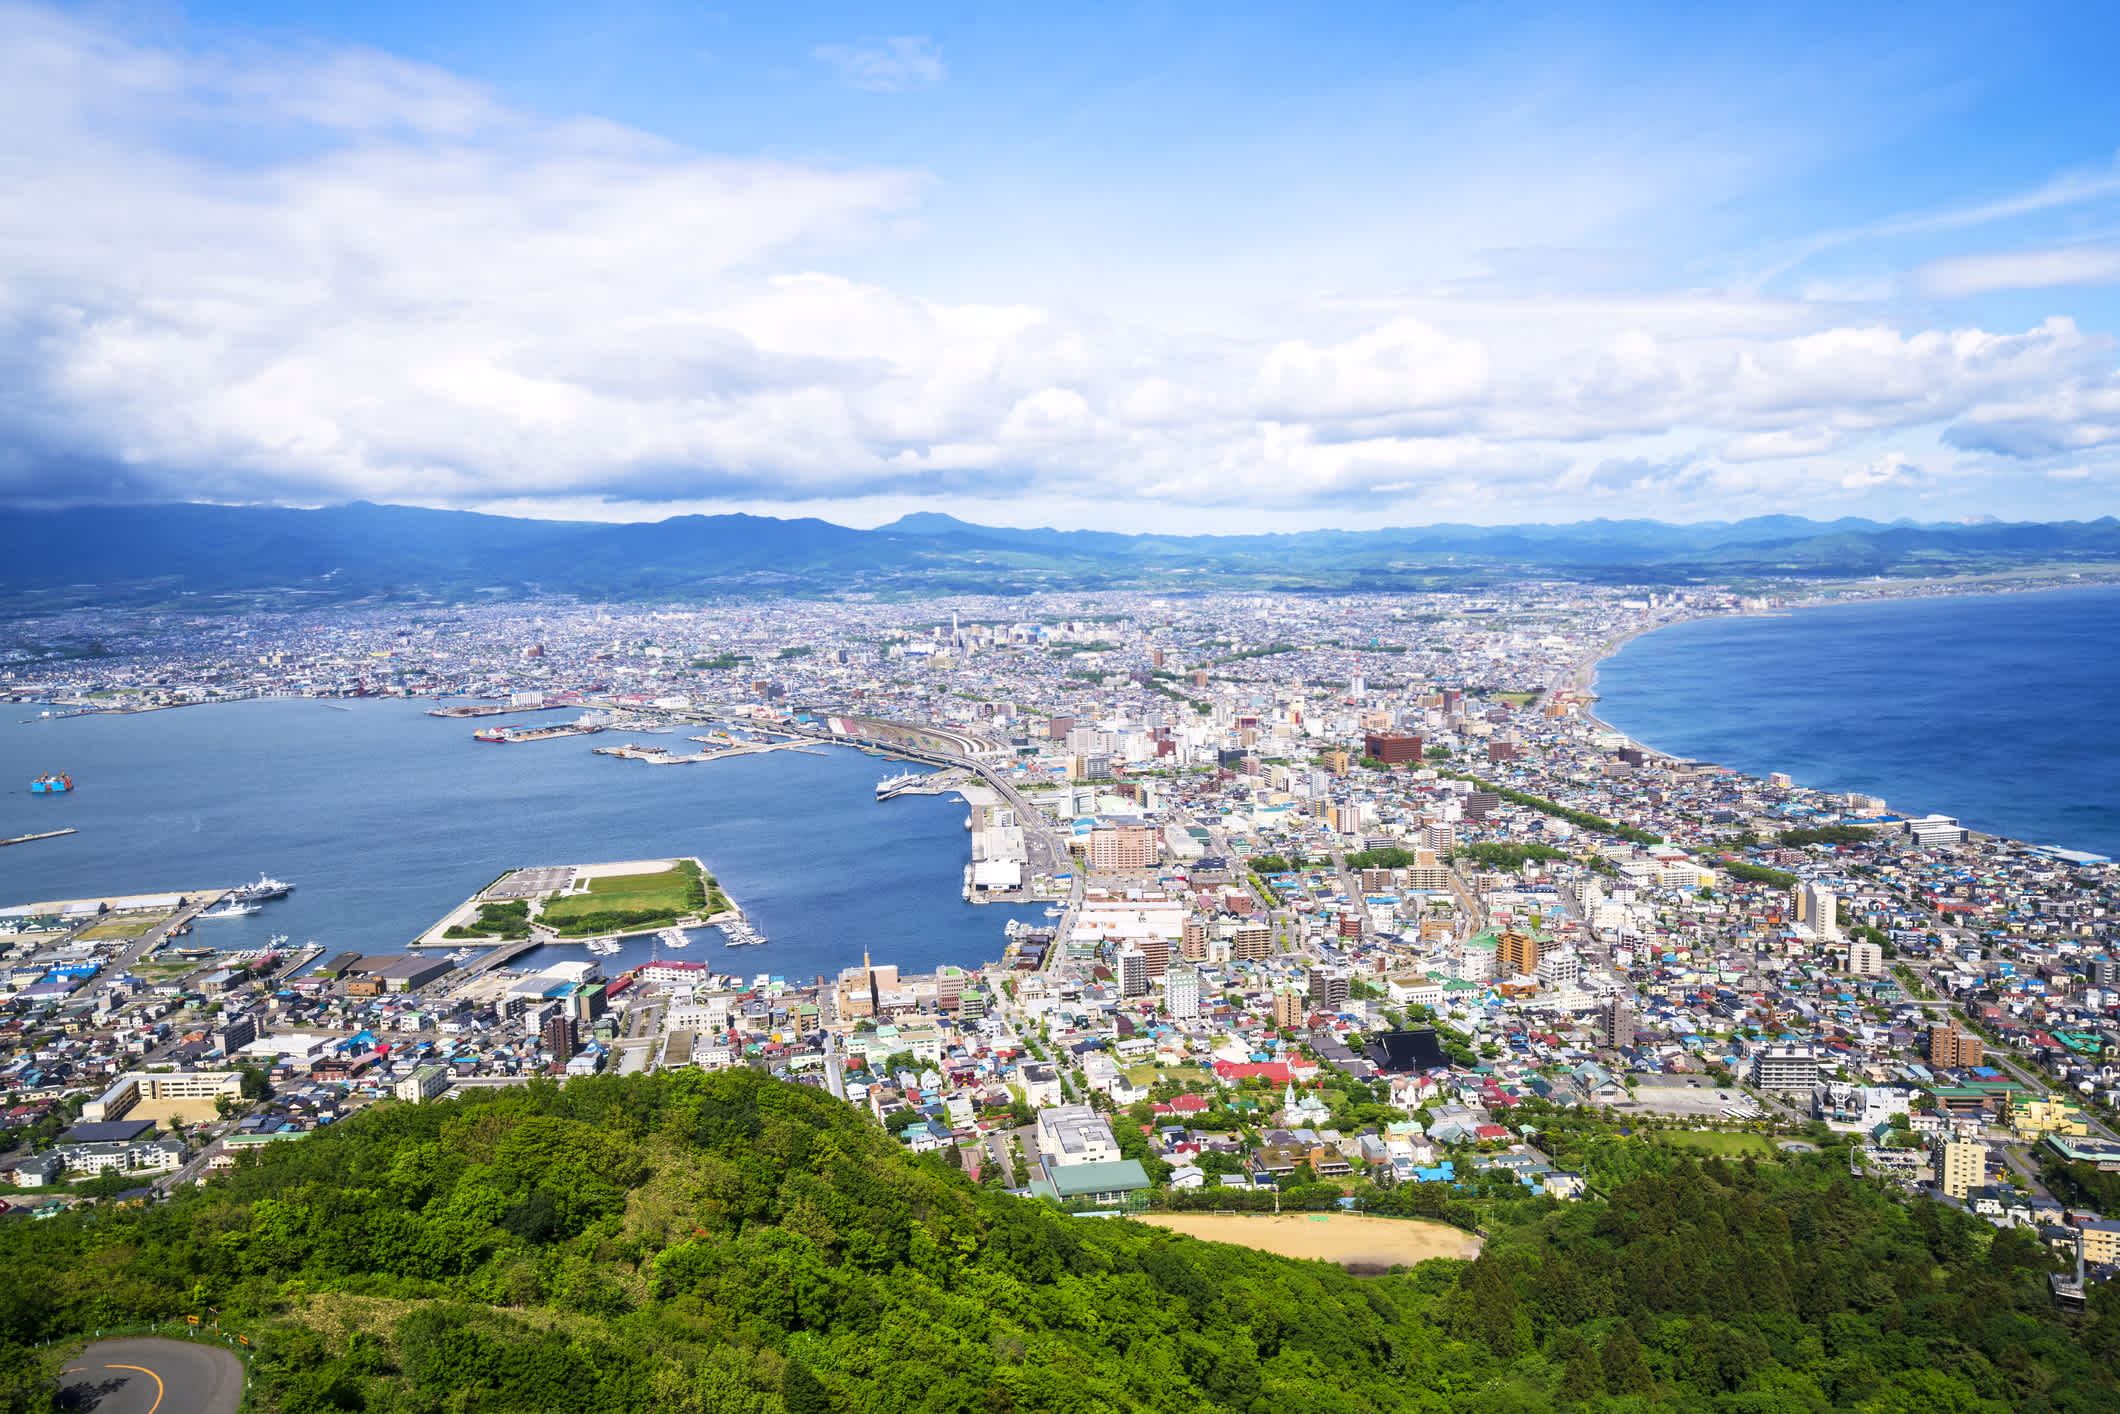 Das Panorama von dem Mount Hakodate, Hokkaido, Japan.

